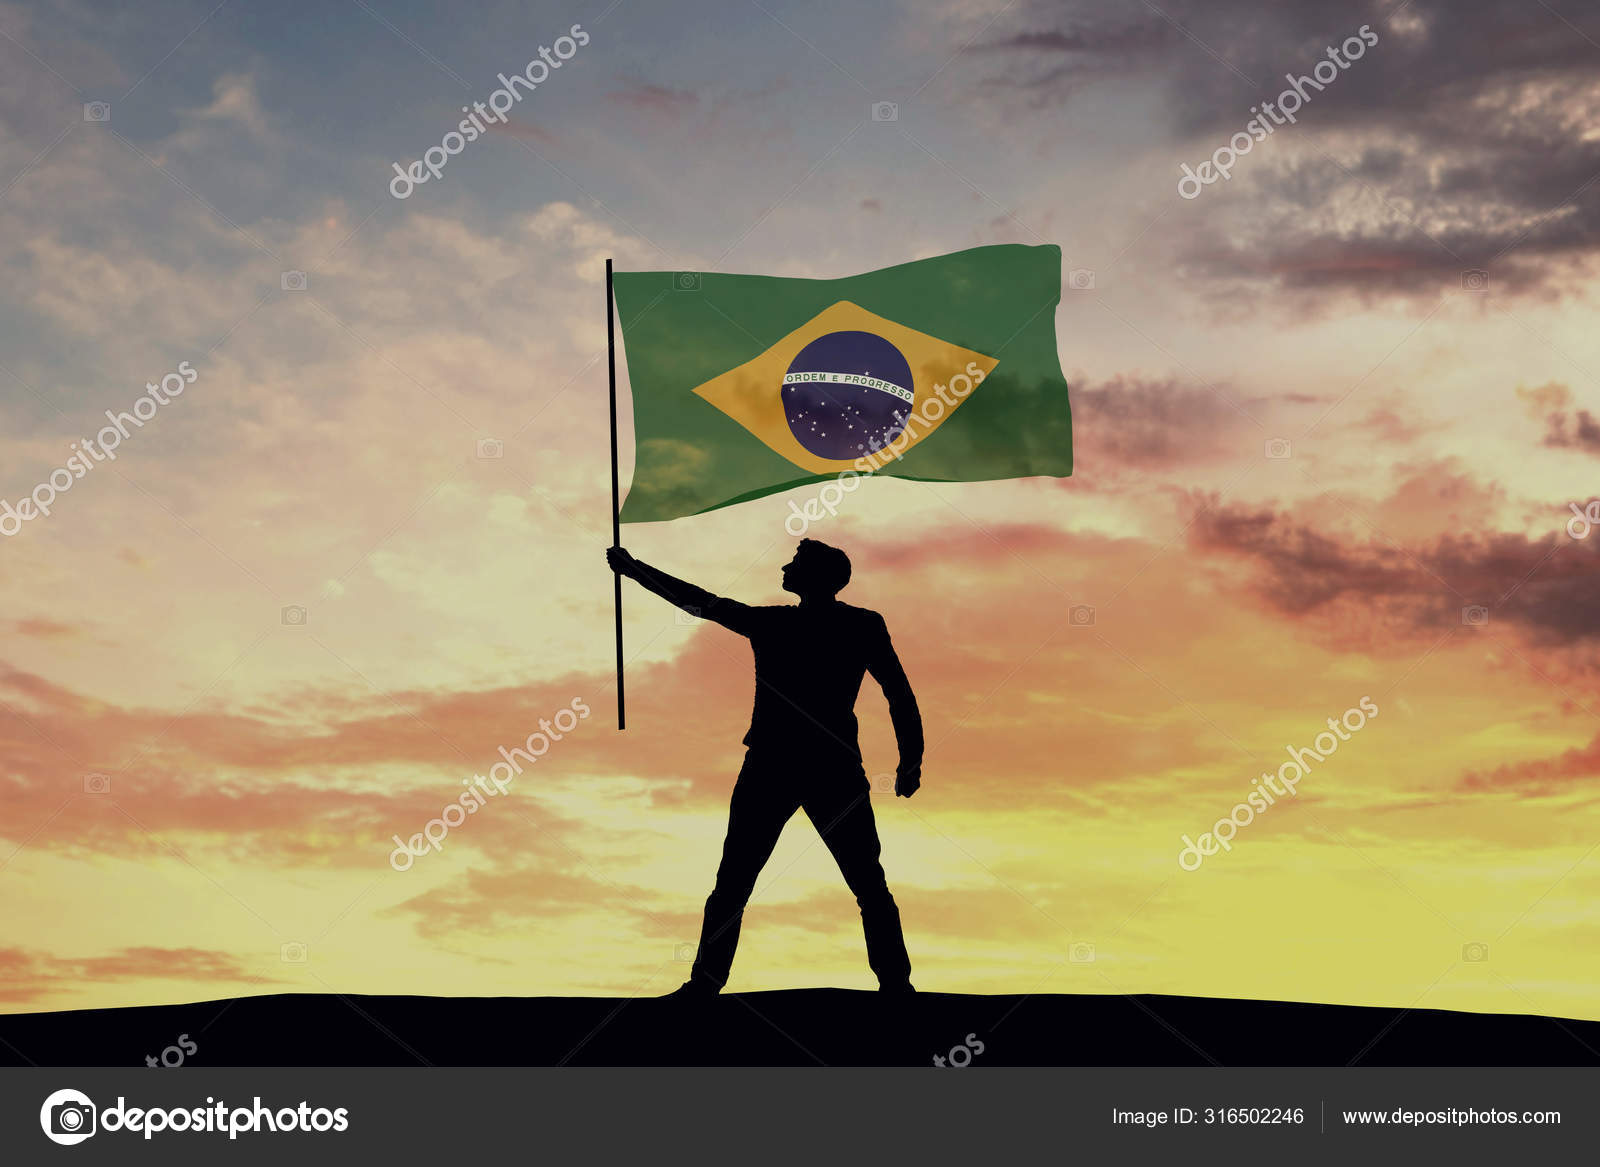 https://st3.depositphotos.com/21486874/31650/i/1600/depositphotos_316502246-stock-photo-male-silhouette-figure-waving-brazil.jpg